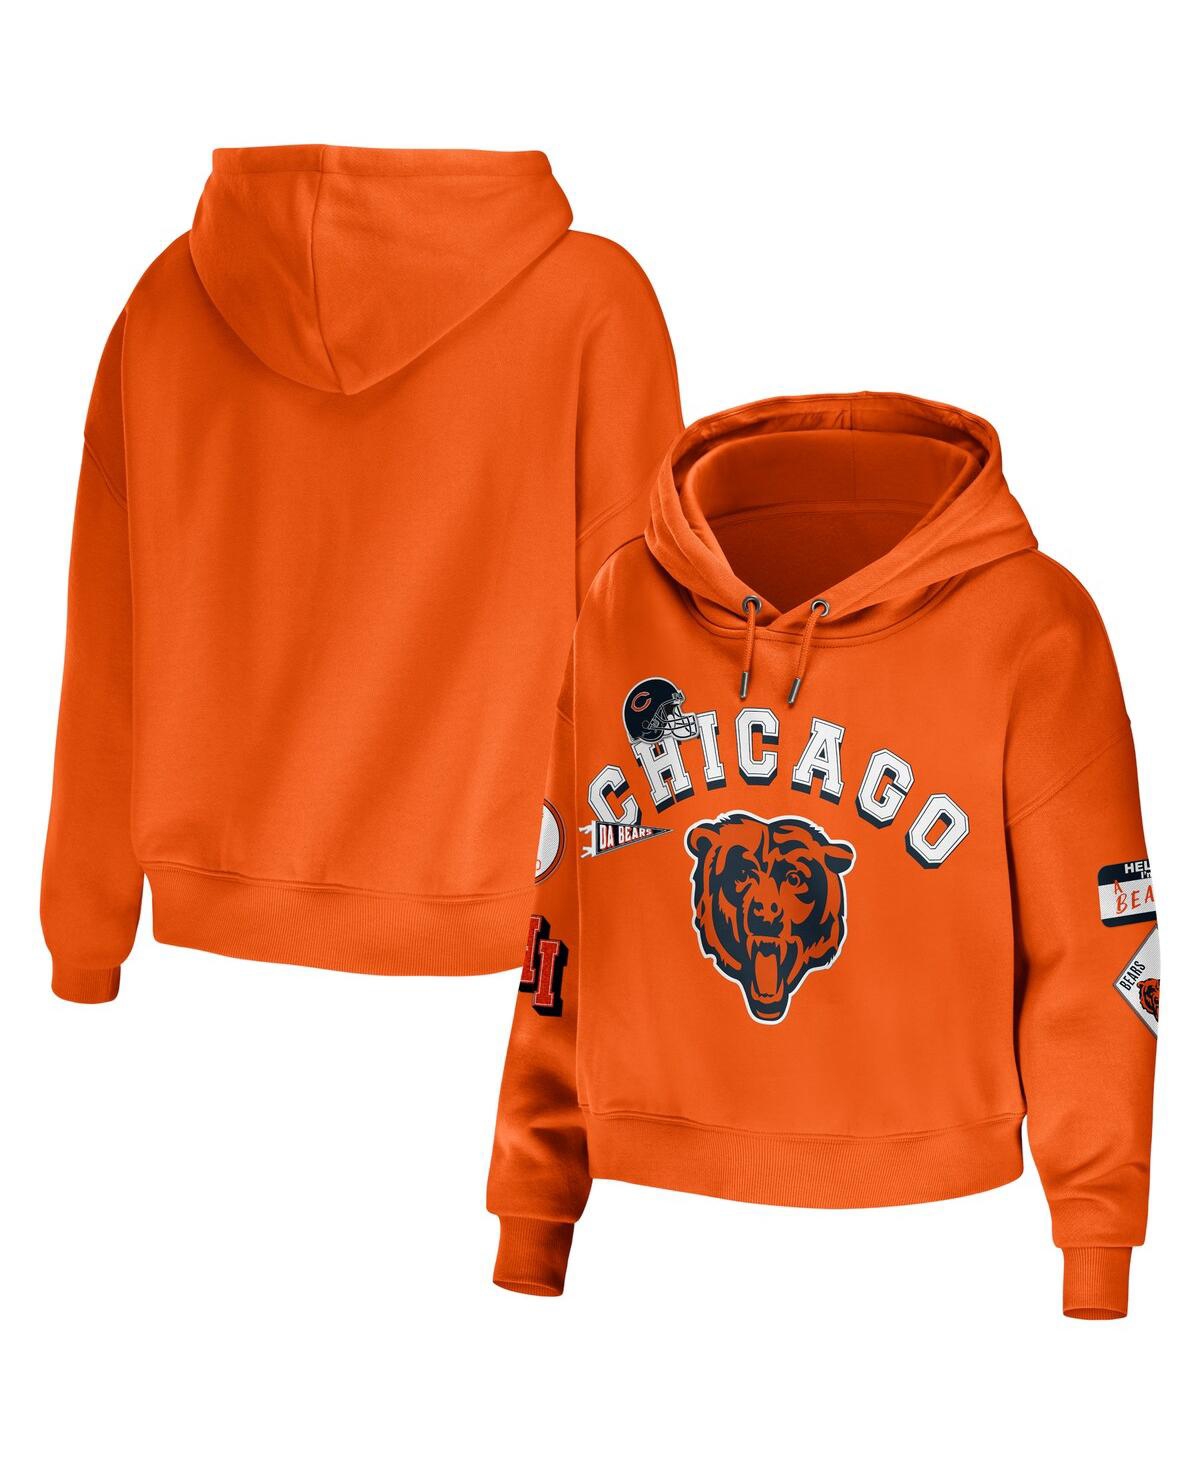 Women's Wear by Erin Andrews Orange Chicago Bears Plus Size Modest Cropped Pullover Hoodie - Orange